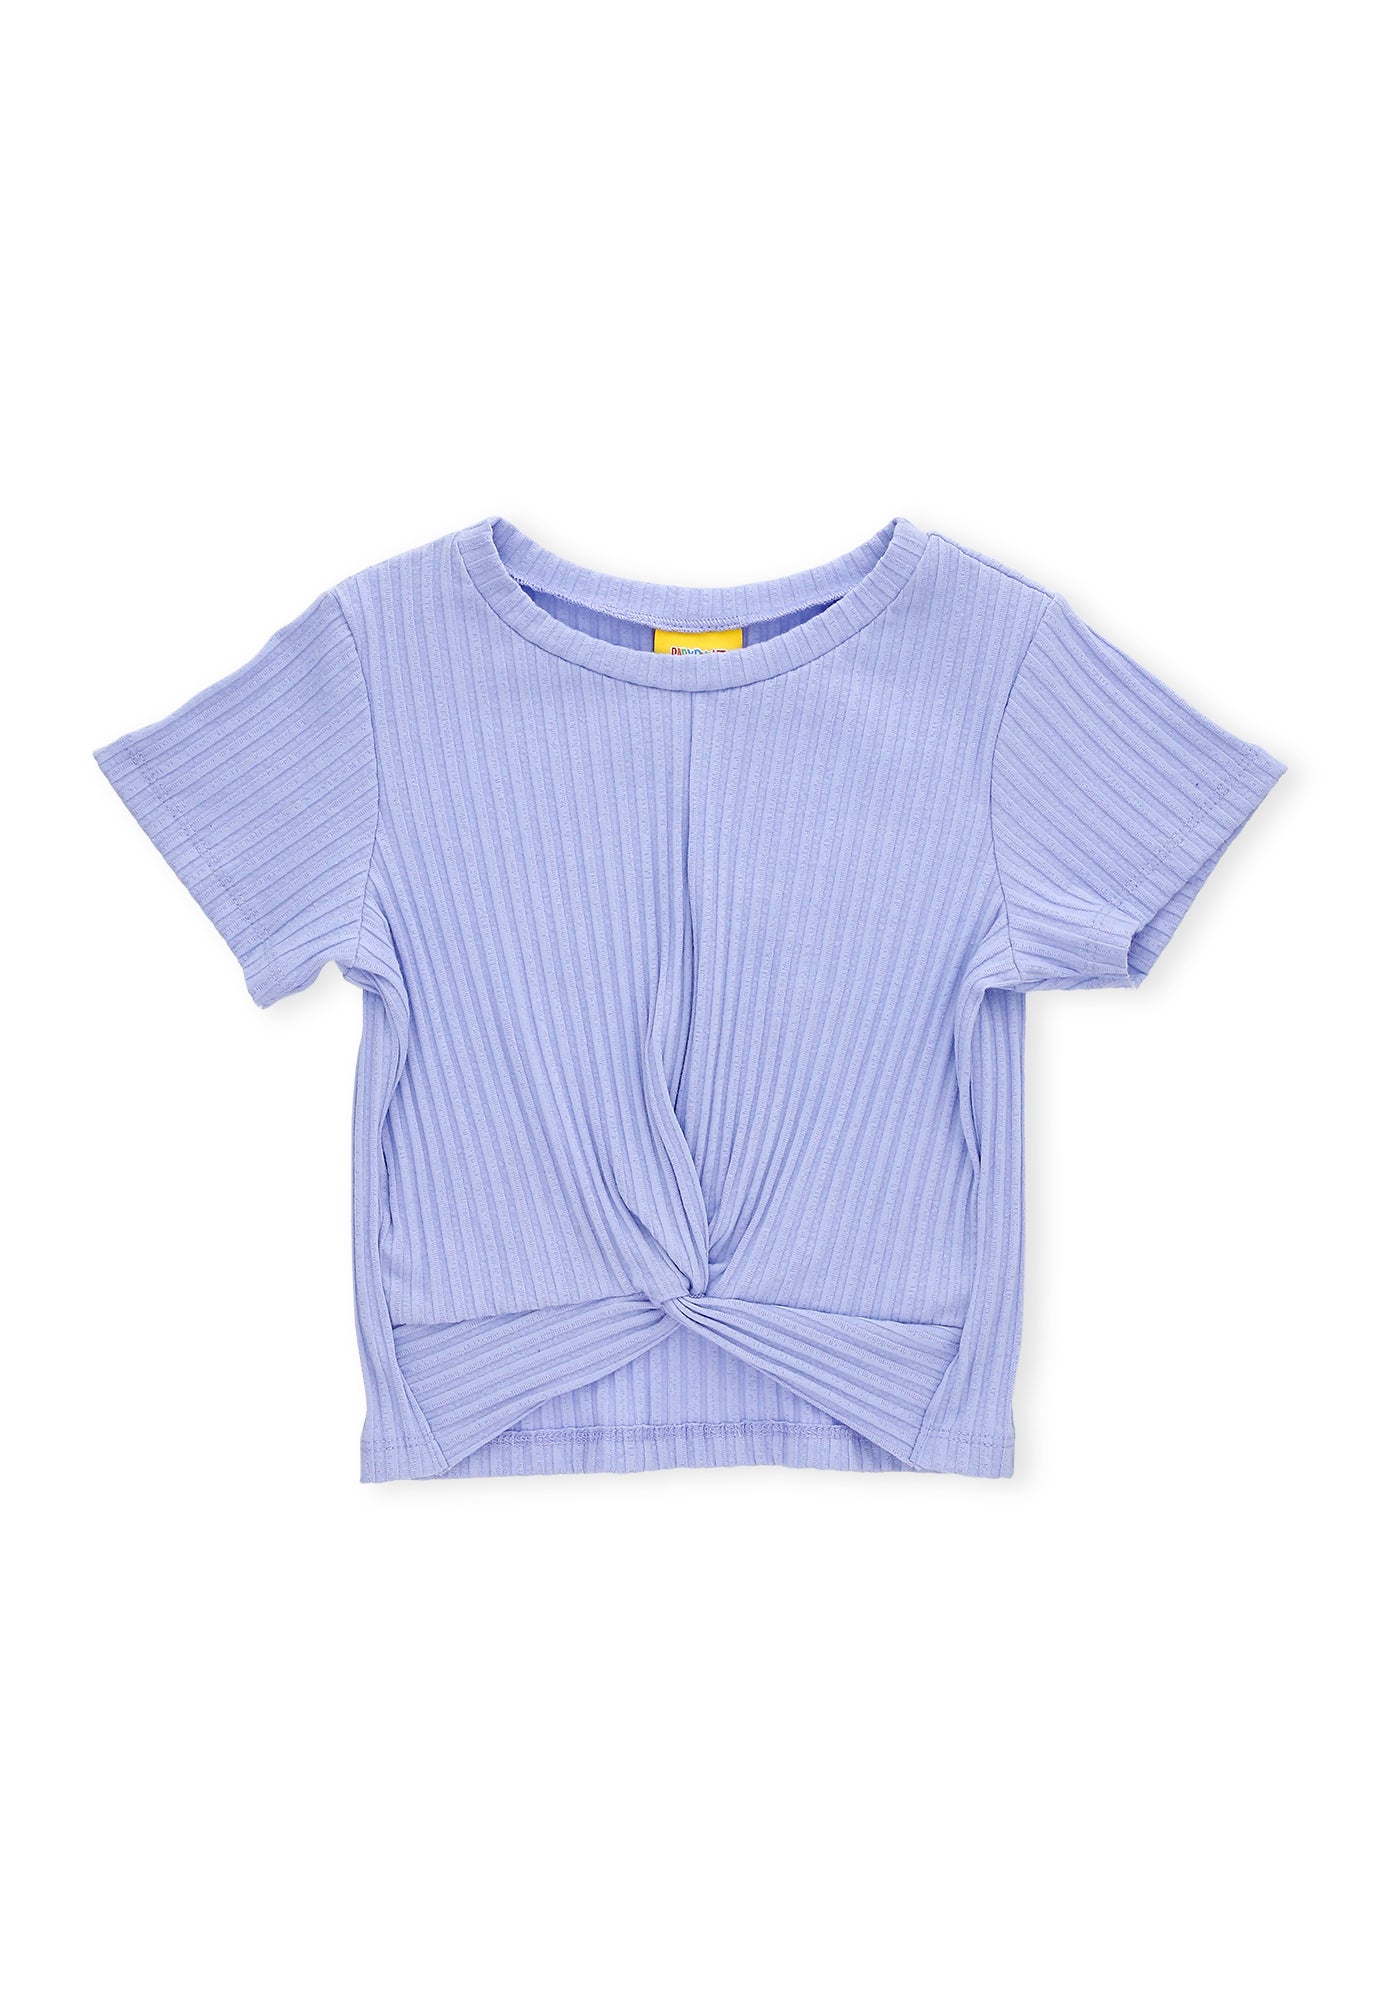 Camiseta morado lavanda fondo entero, con frente entorchado y manga corta para bebé niña